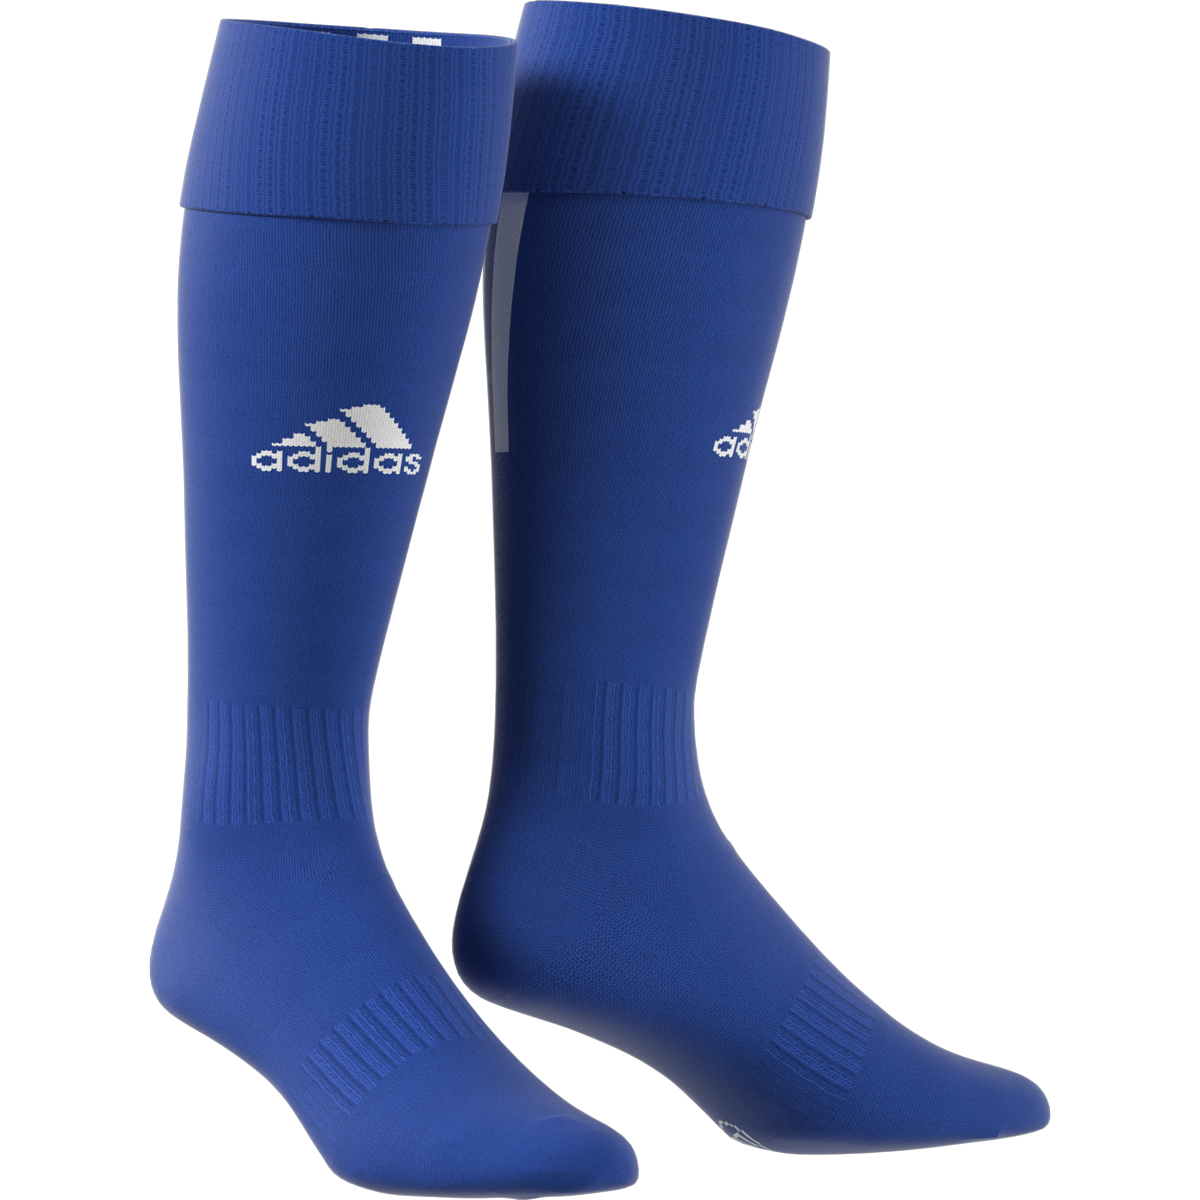 Adidas Santos 18 modrá/bílá EU 27/30